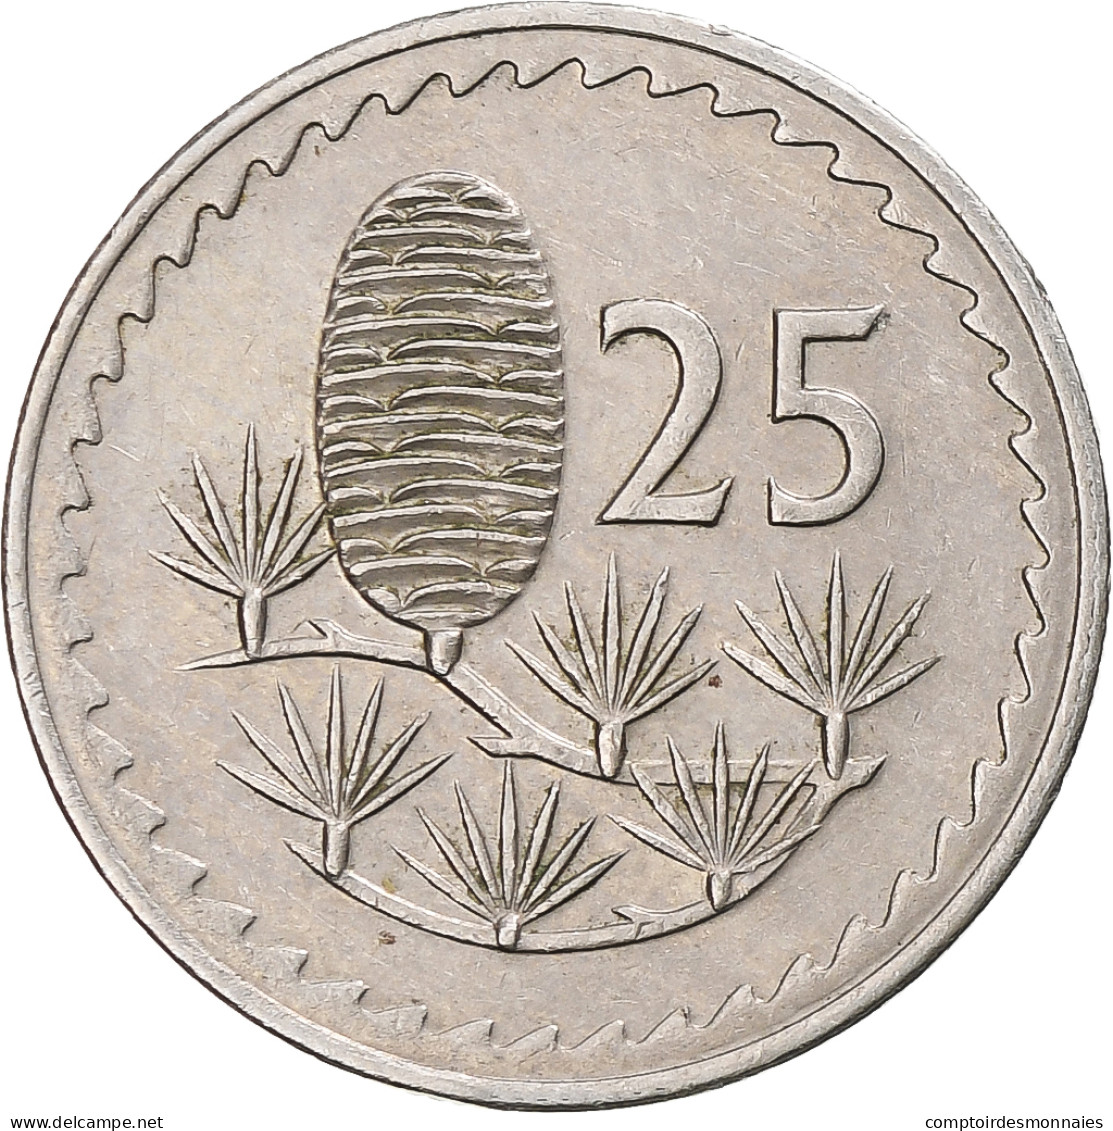 Chypre, 25 Cents, 1974 - Zypern